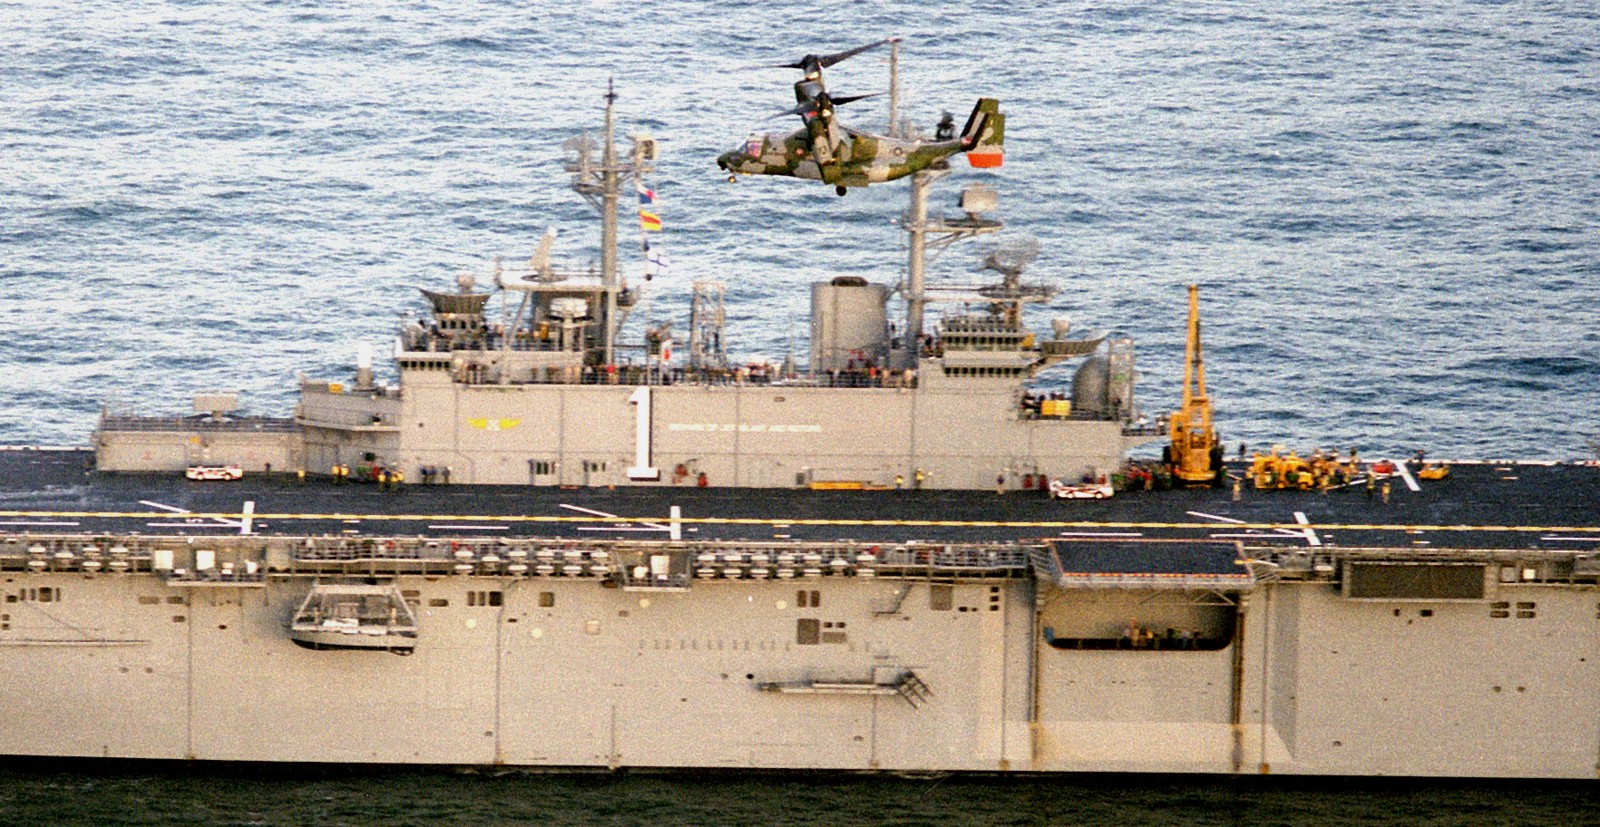 lhd-1 uss wasp amphibious assault landing ship dock helicopter us navy v-22a osprey trials 64